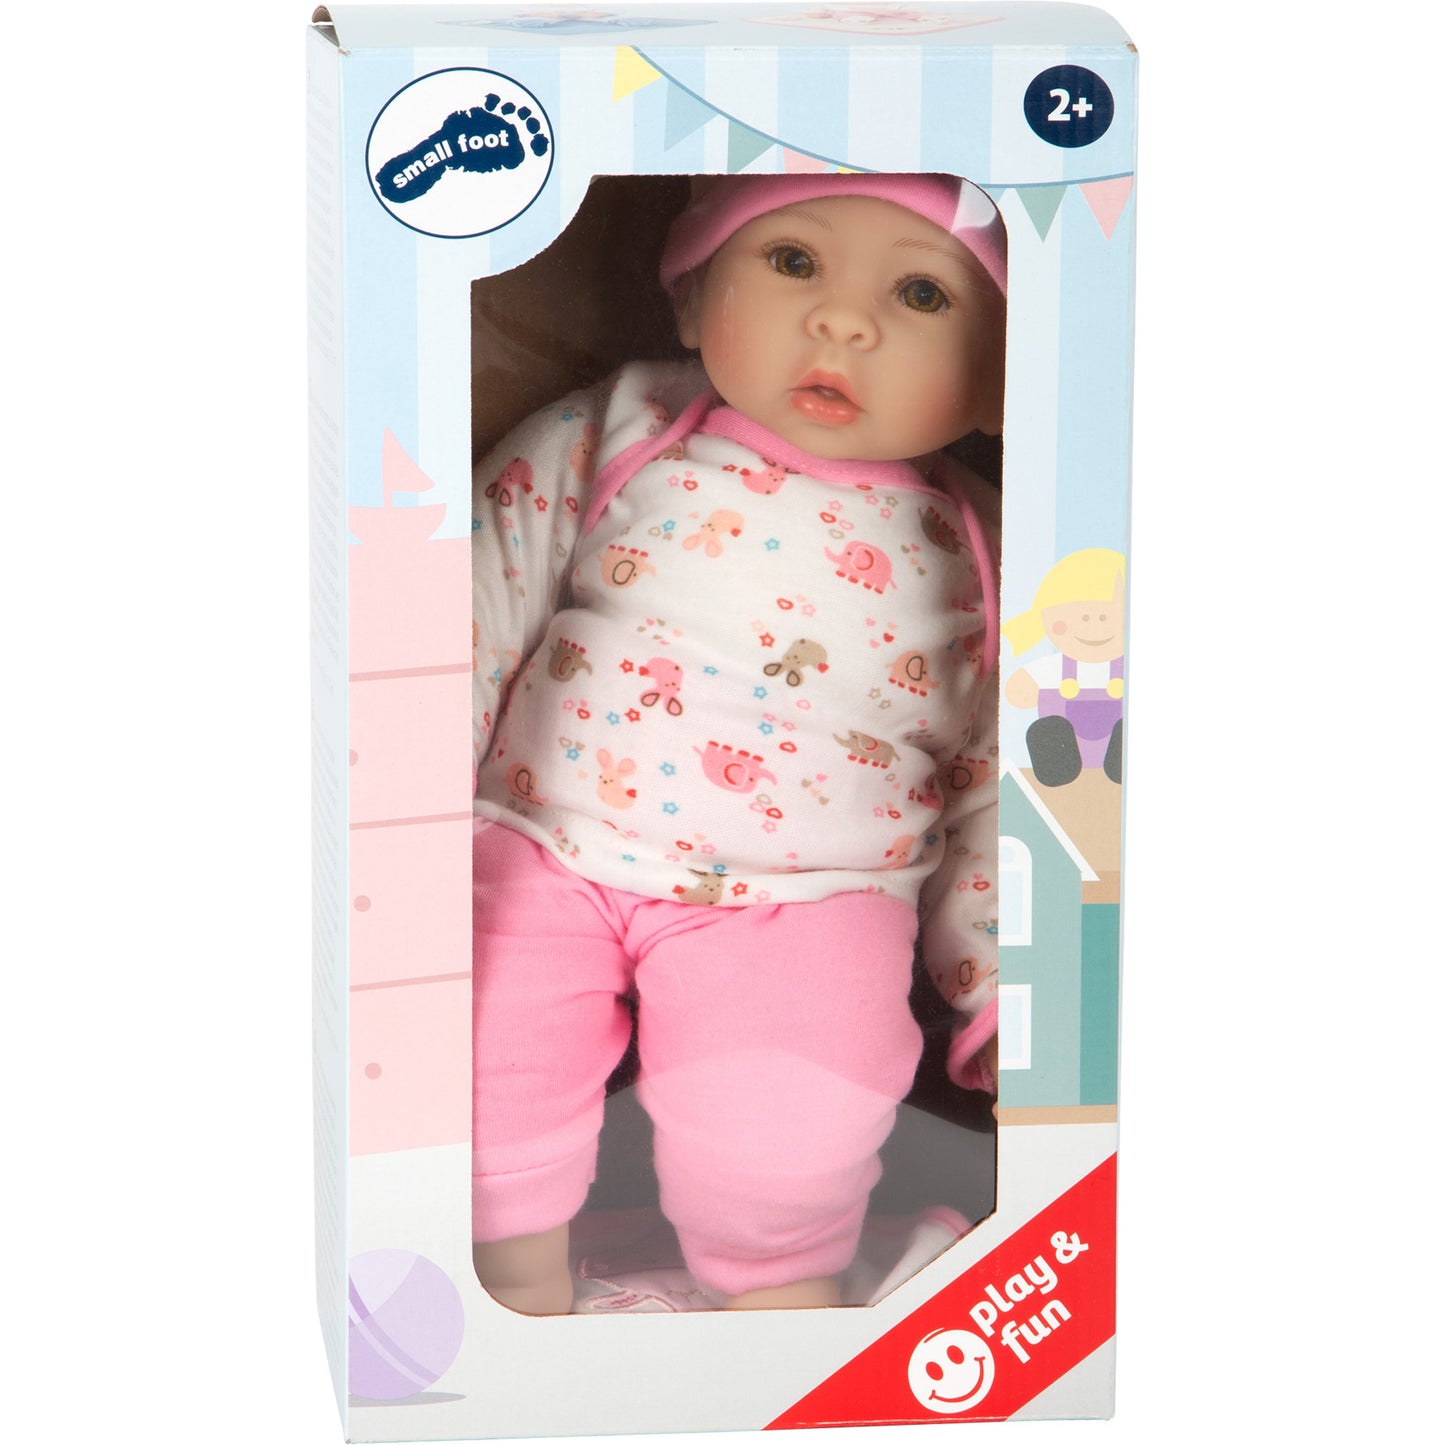 Baby Doll "Hanna" Playset